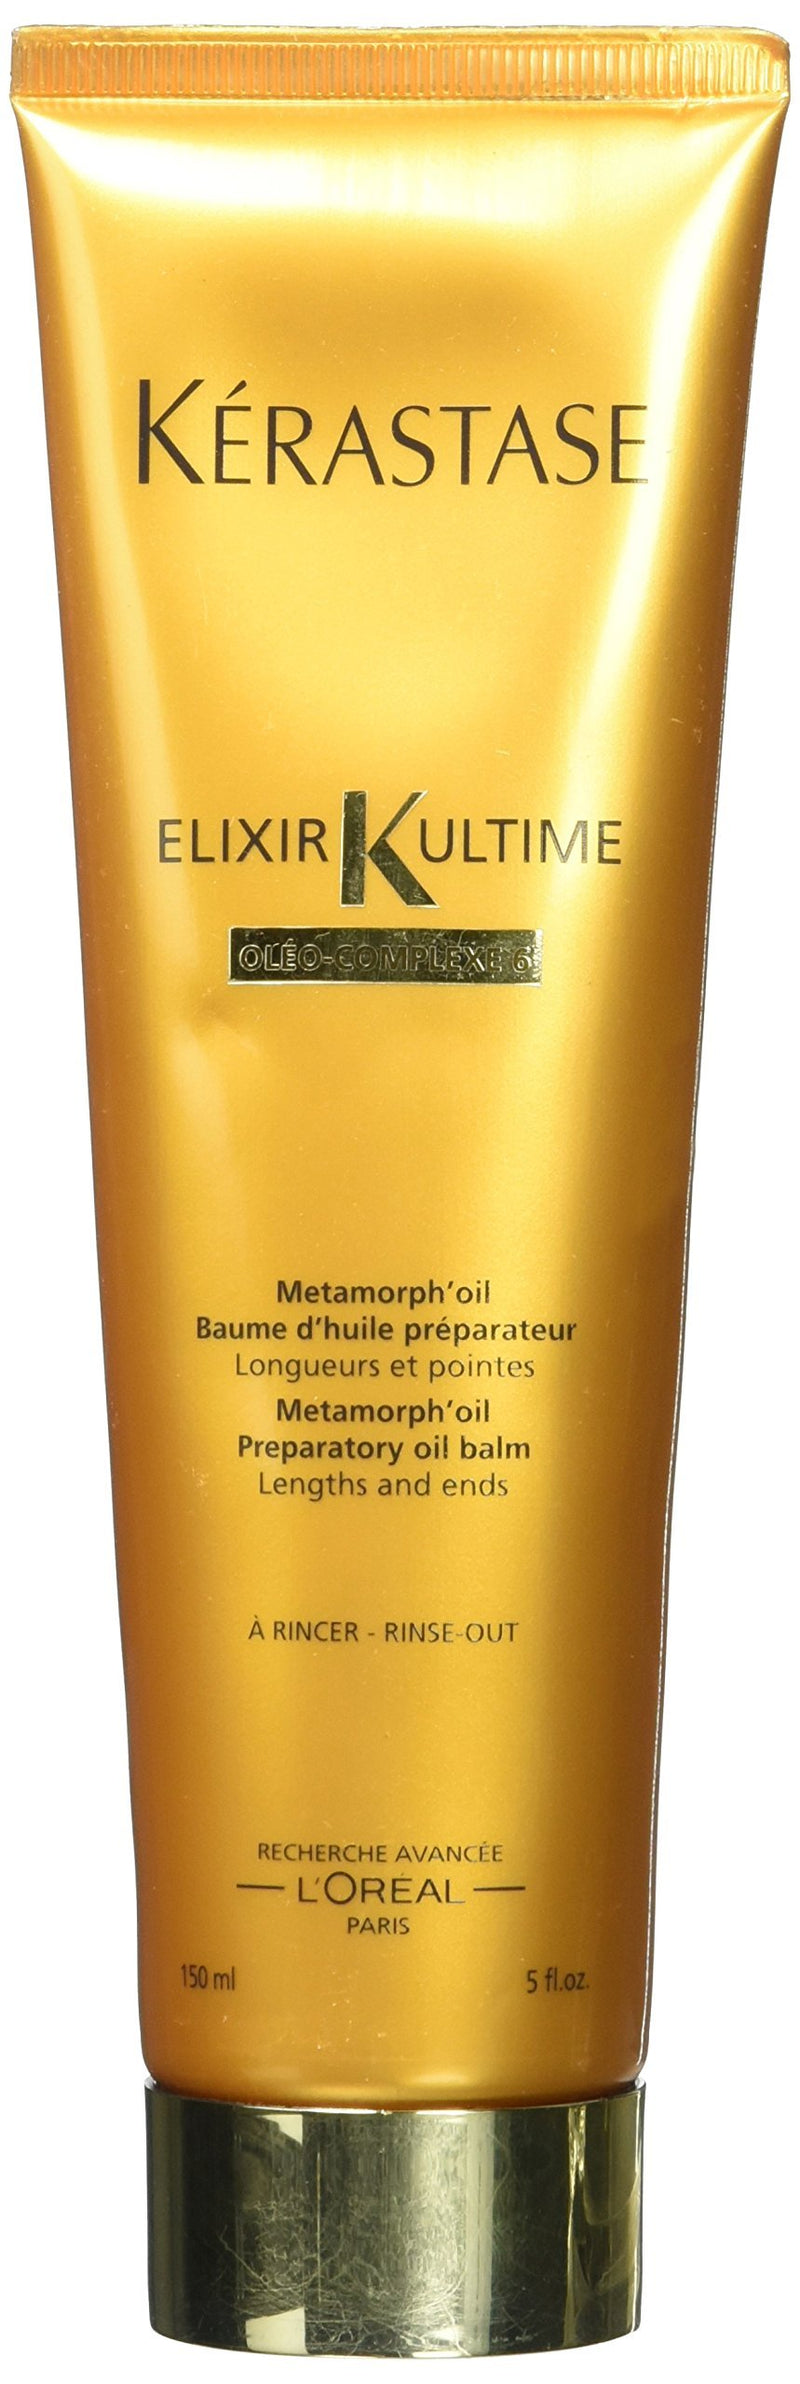 Kerastase Elixir Ultime Metamorph'Oil Preparatory Oil Balm, 5 Ounce